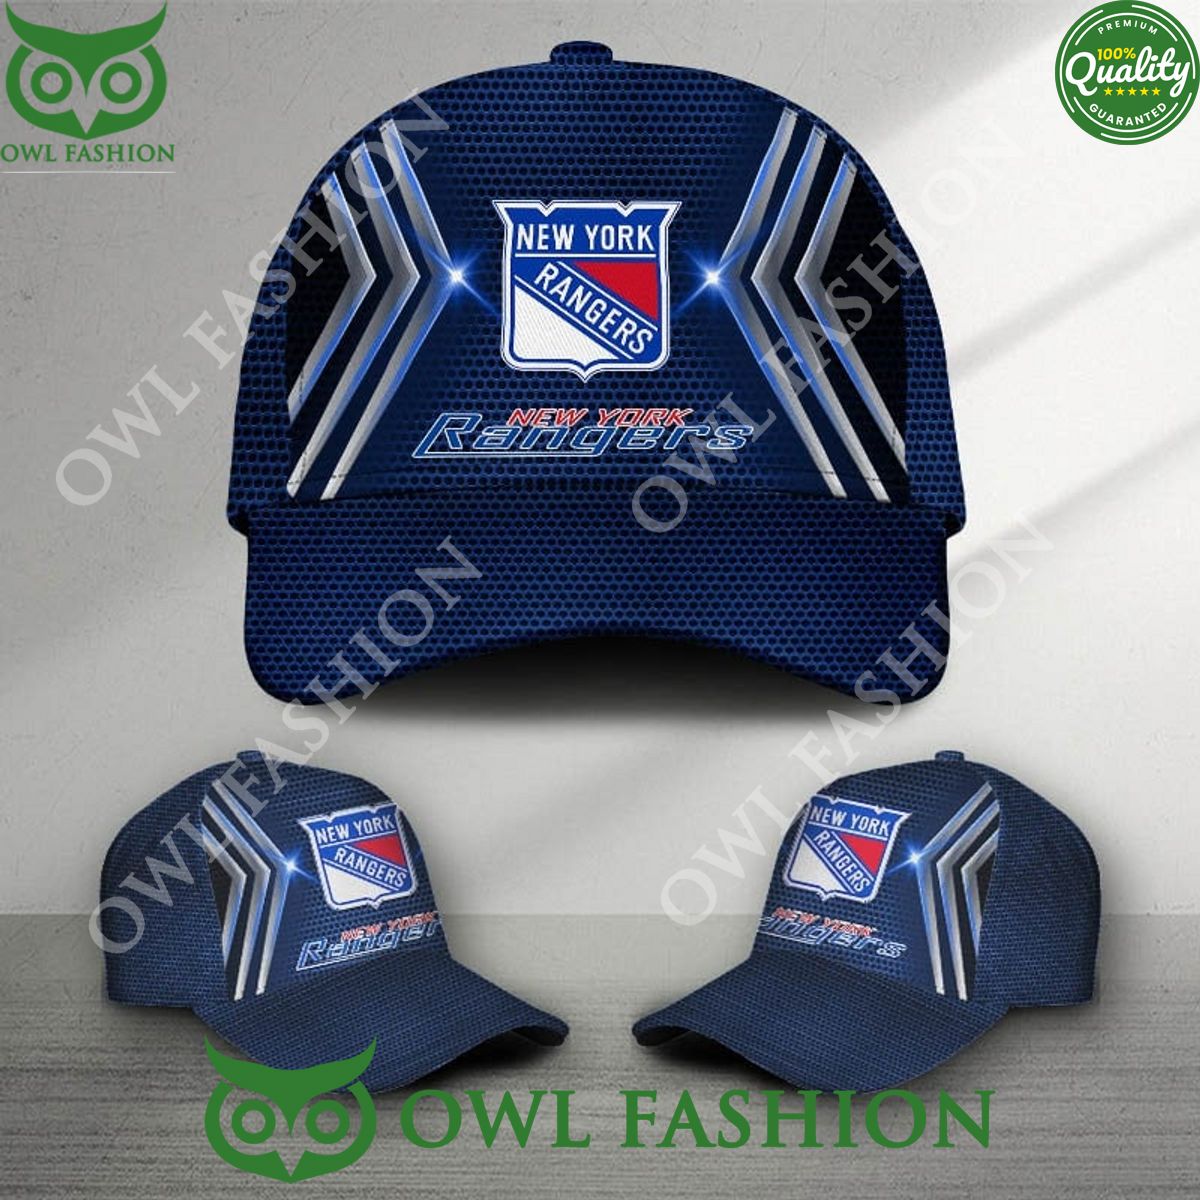 new york rangers printed nhl ice hockey classic cap 1 4VAvW.jpg